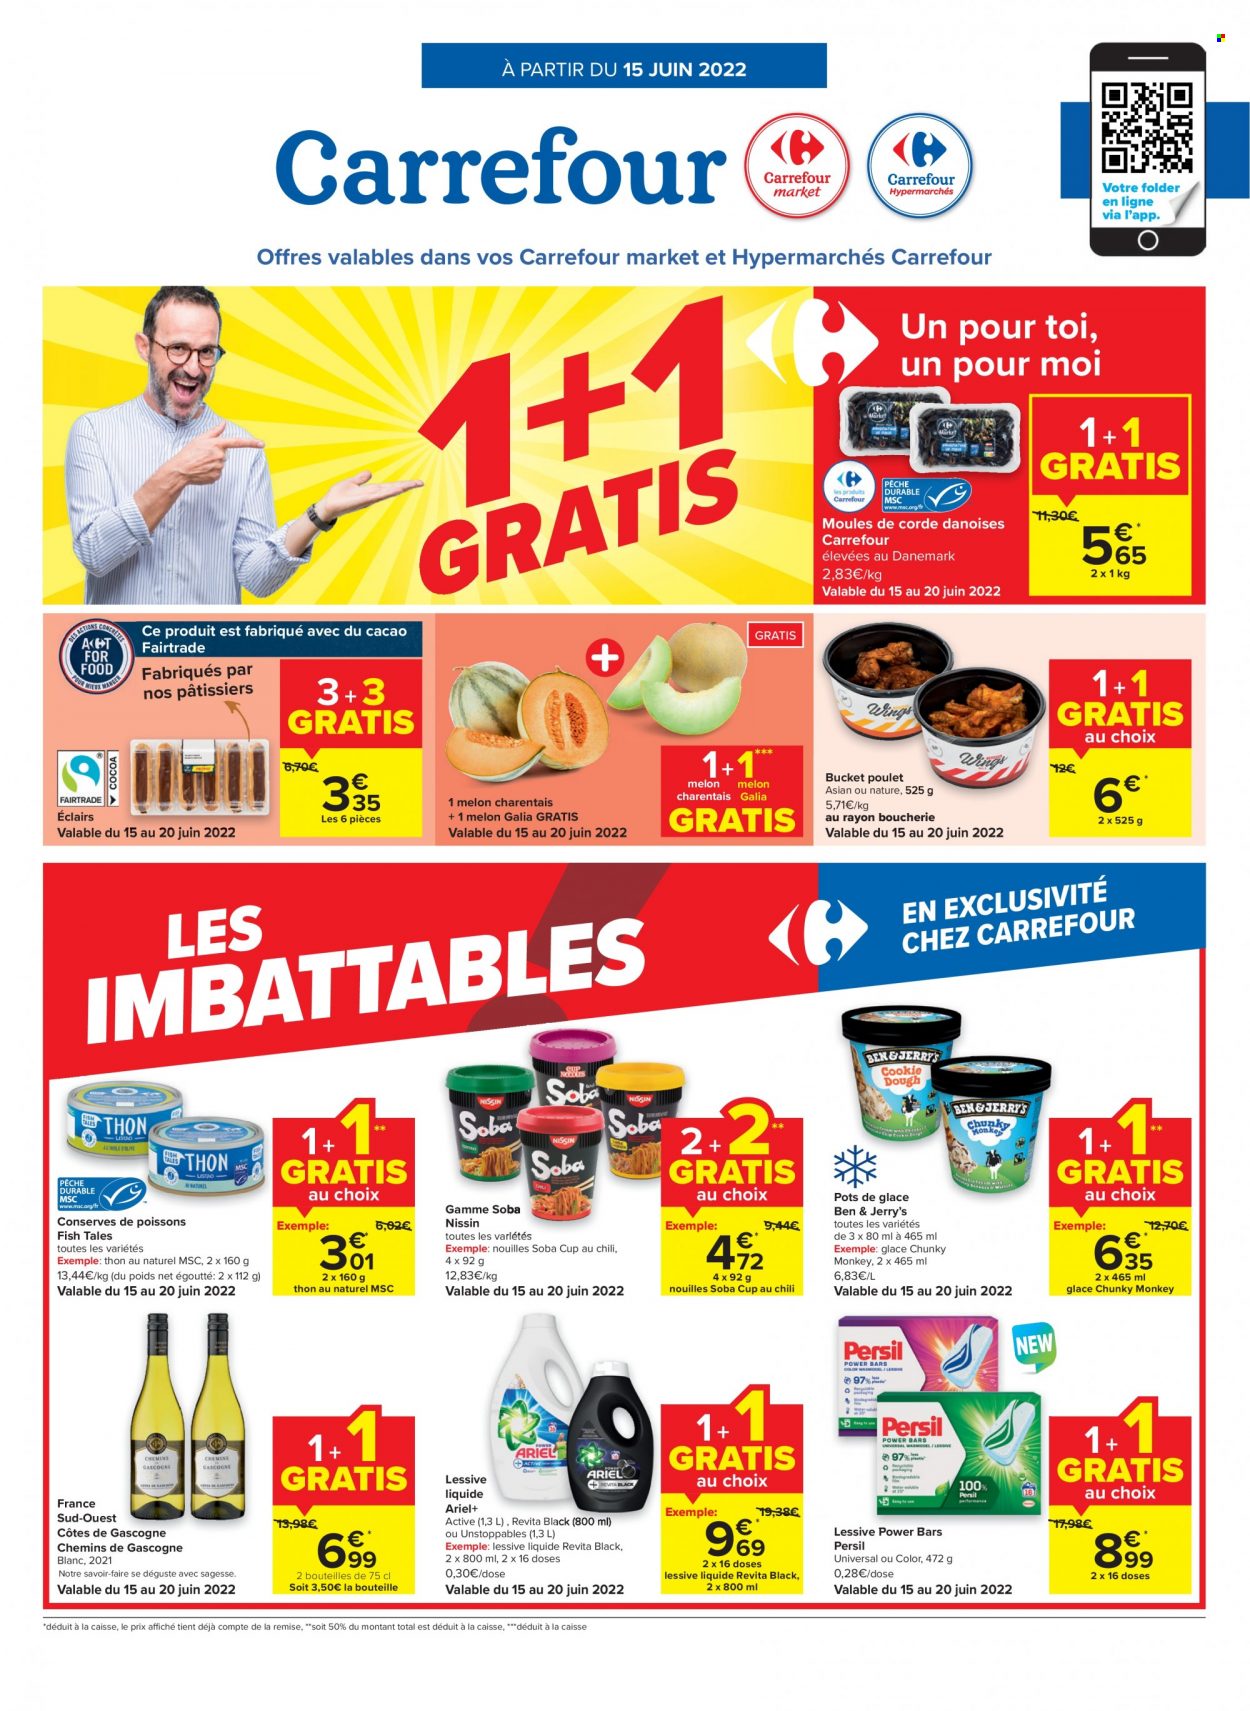 Carrefour-aanbieding - 15.6.2022 - 27.6.2022 -  producten in de aanbieding - éclairs, galia meloen, Ben & Jerry's, Côtes de Gascogne, Ariel, Persil. Pagina 1.